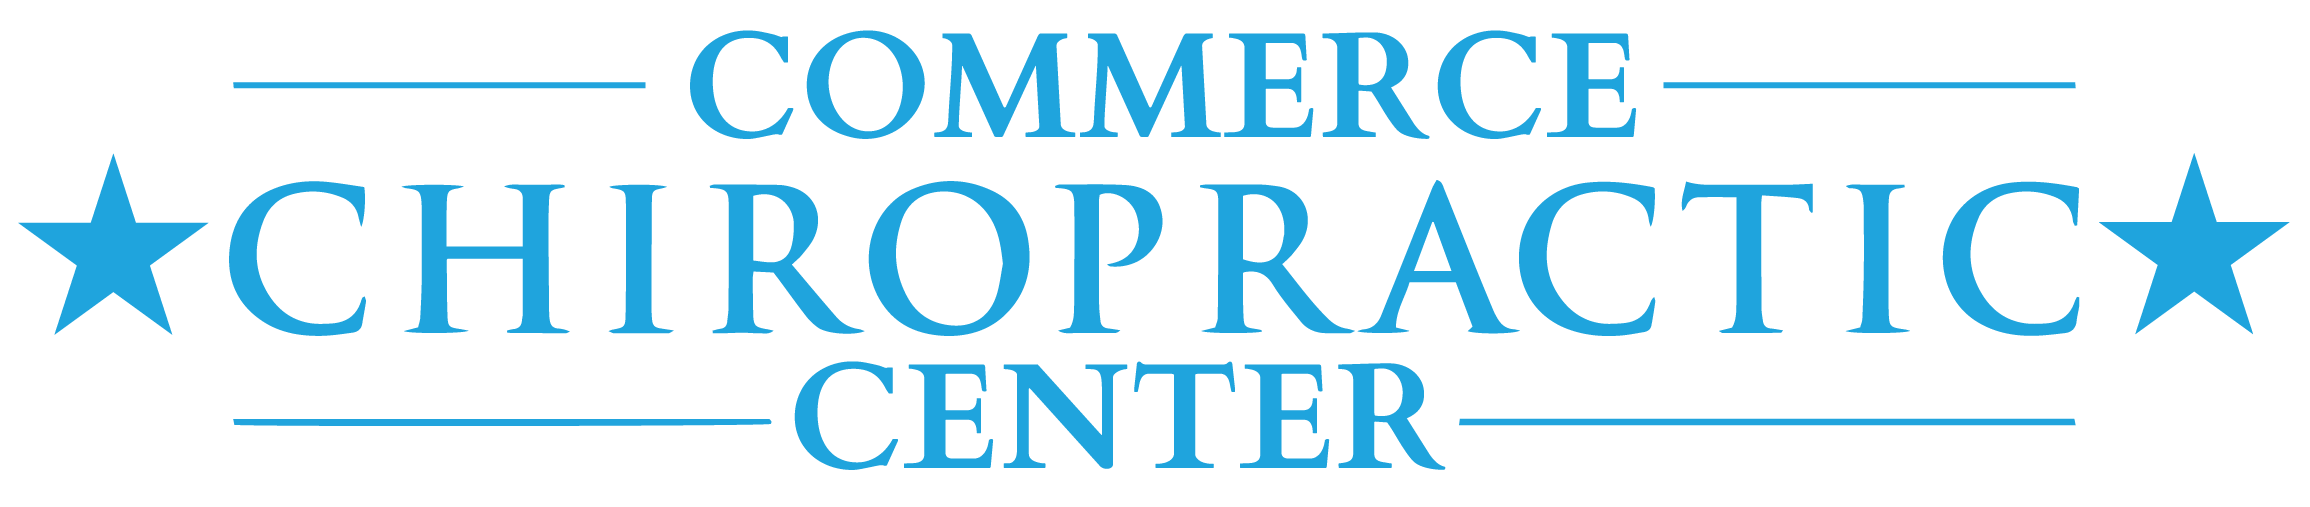 Commerce Chiropractic Center